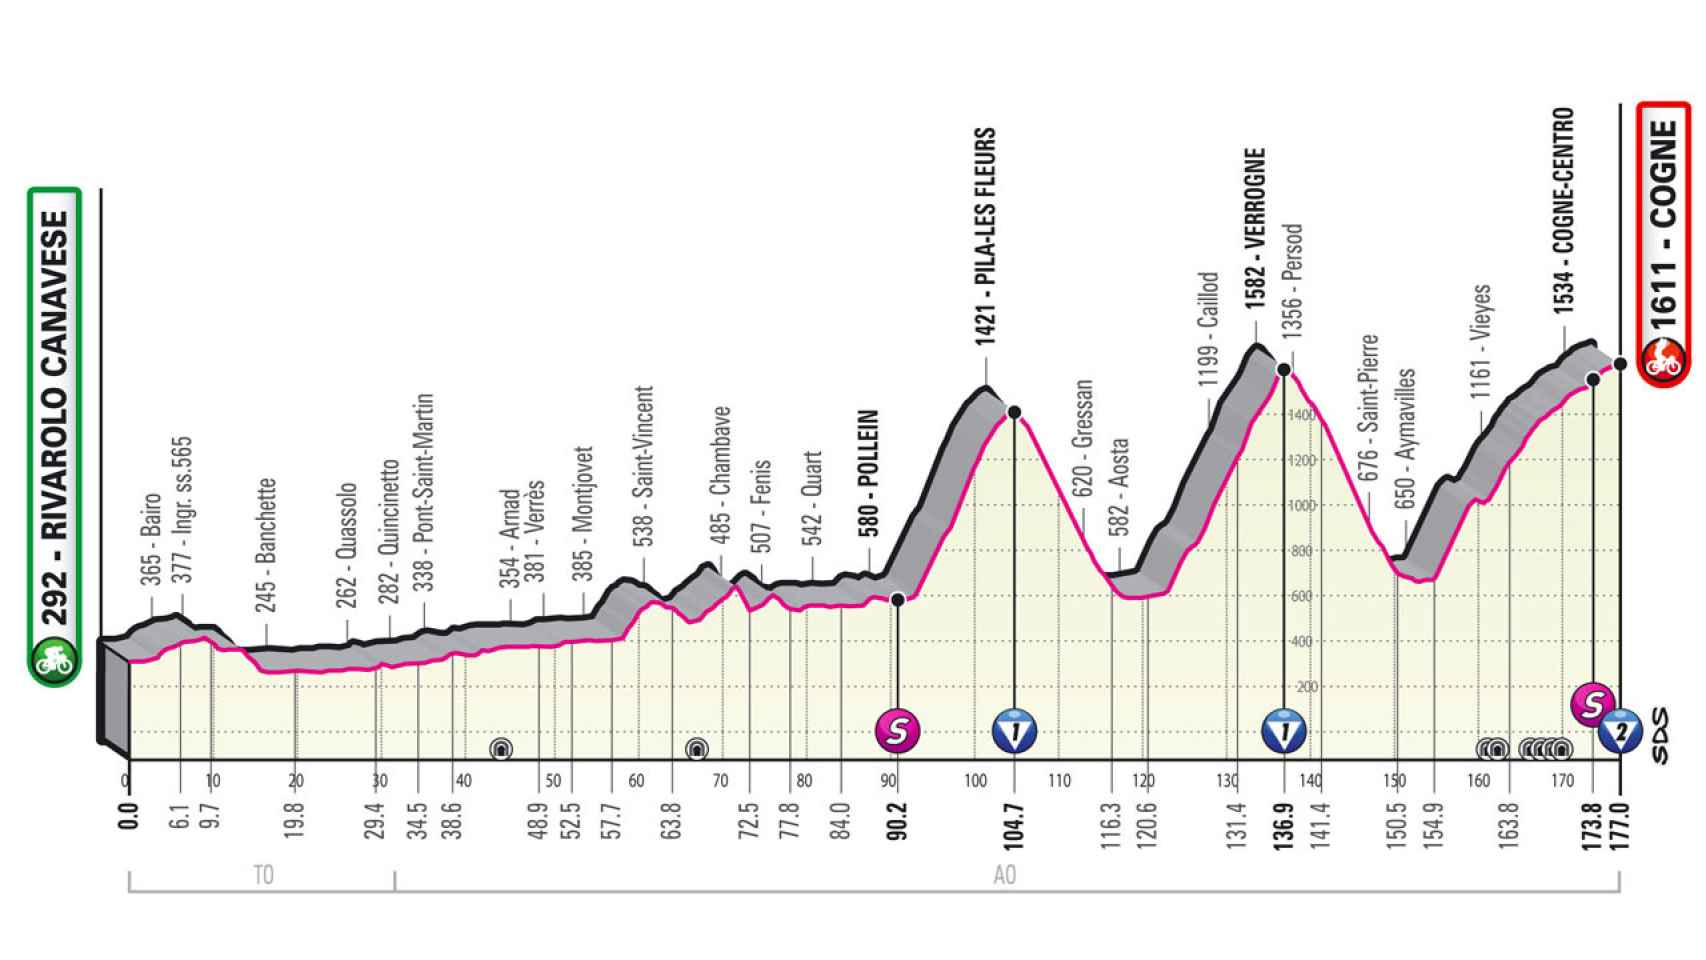 Etapa 15 del Giro de Italia 2022 (Rivarolo Canavese - Cogne 178 km)